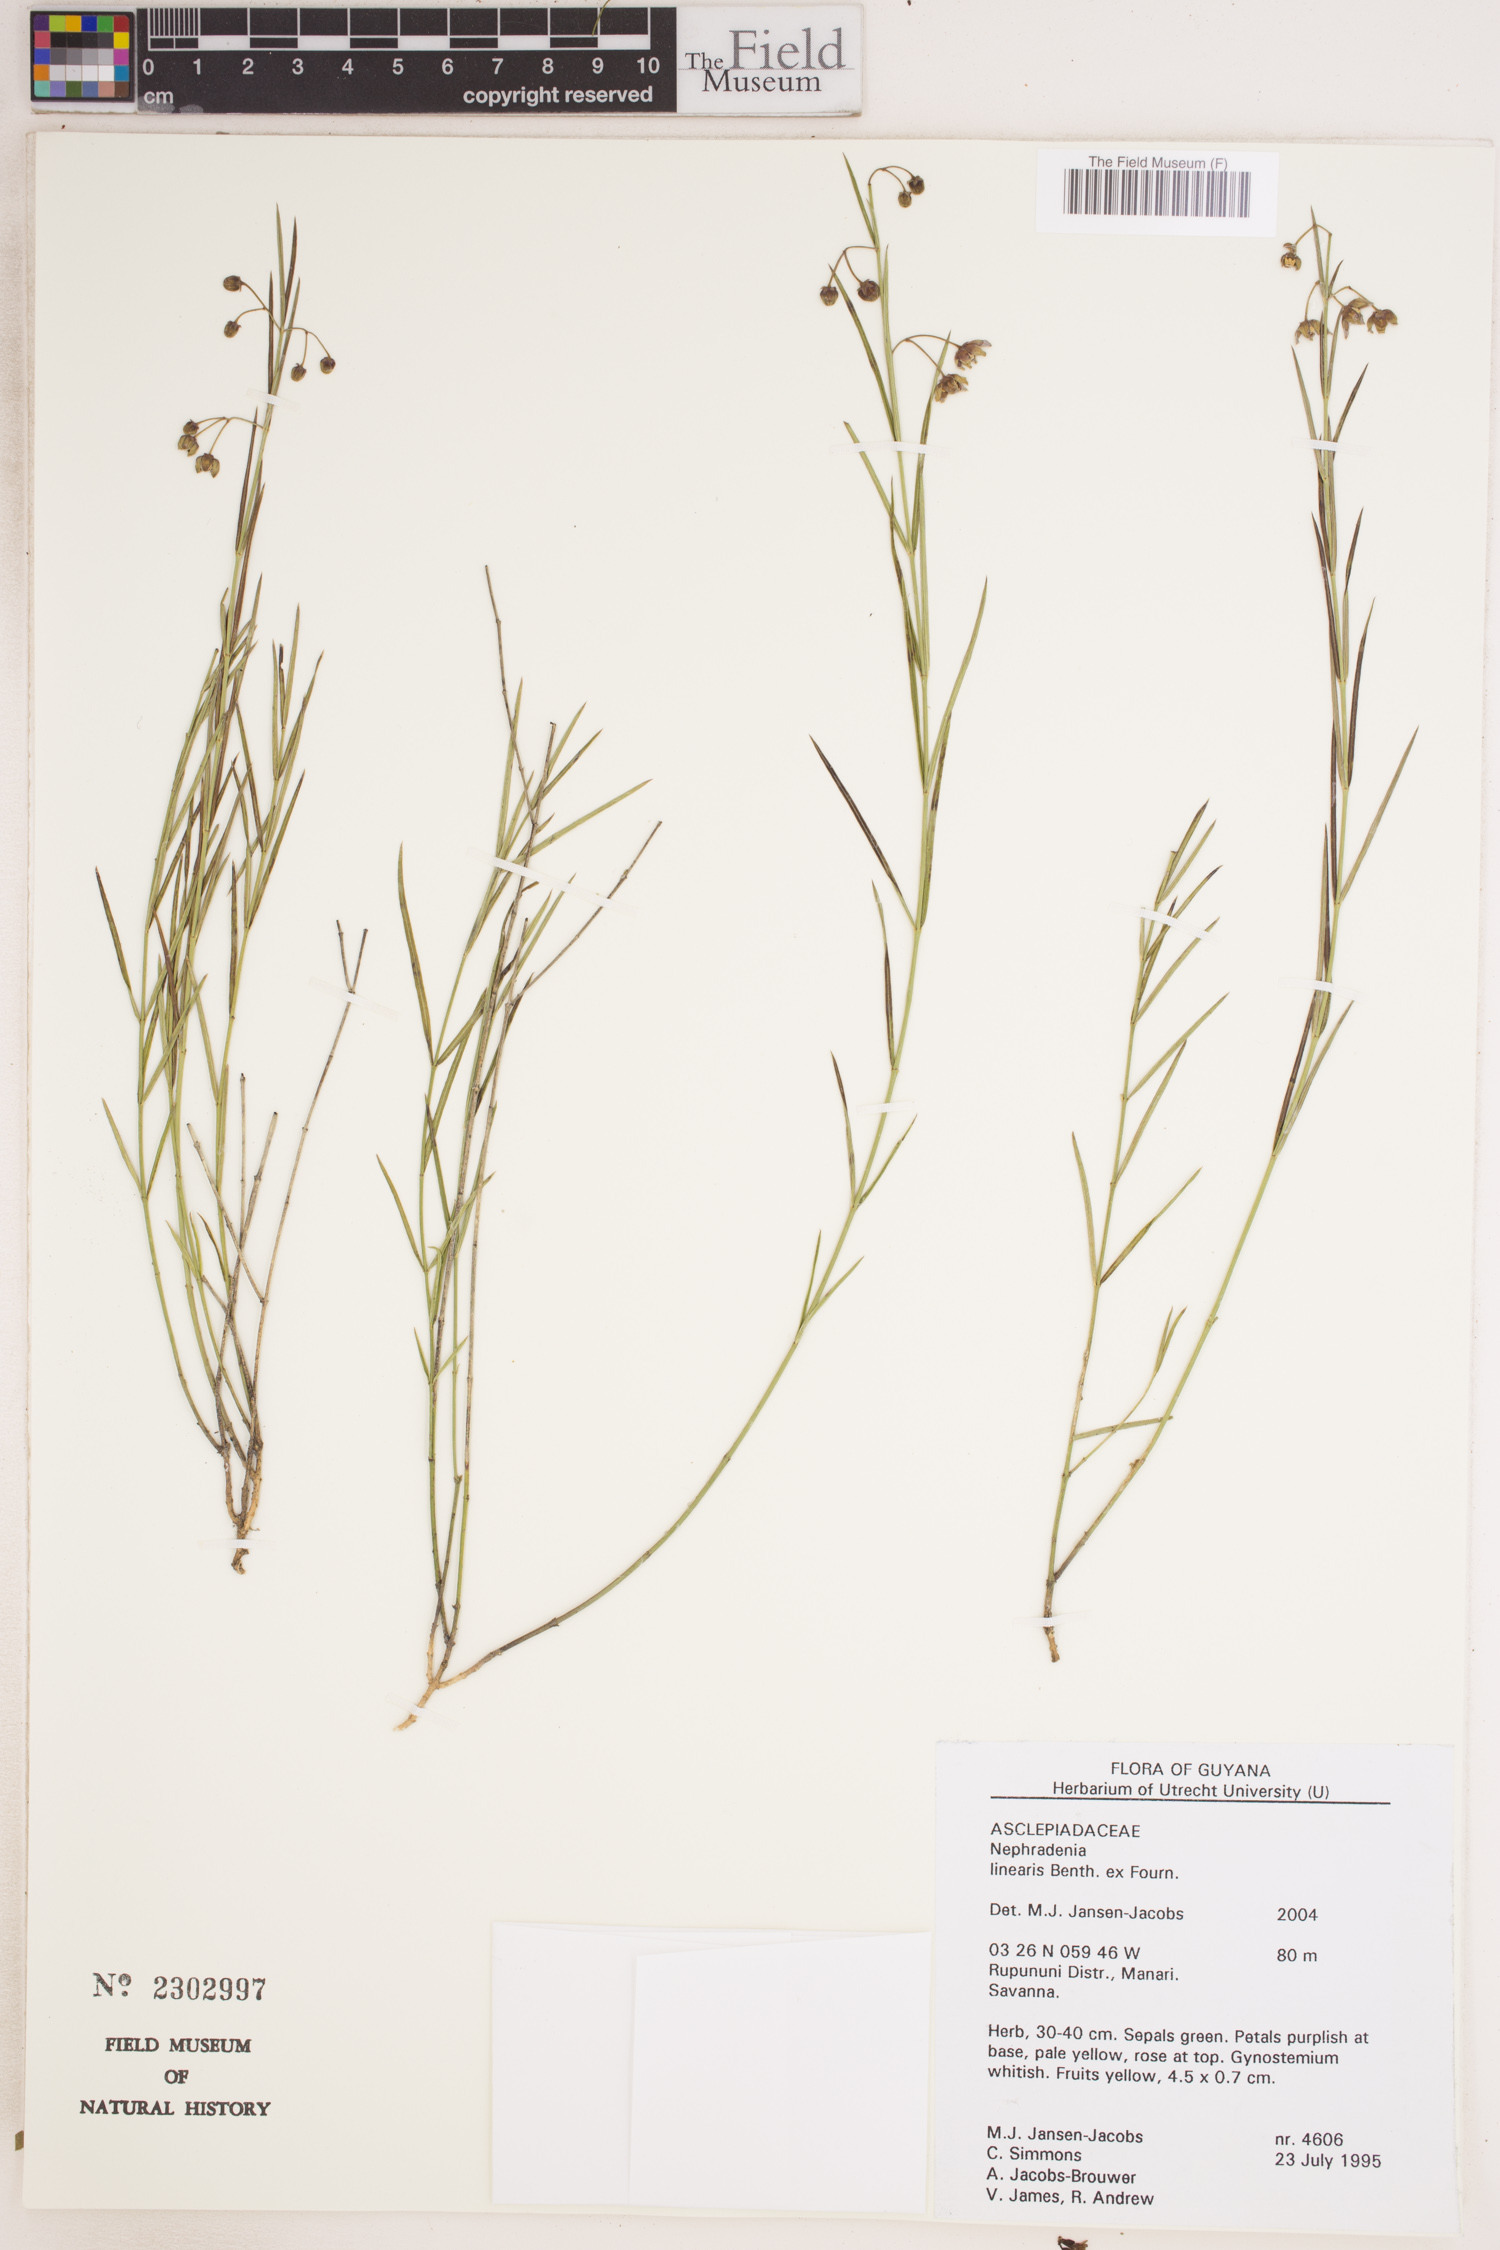 Nephradenia linearis | Rapid Reference | The Field Museum